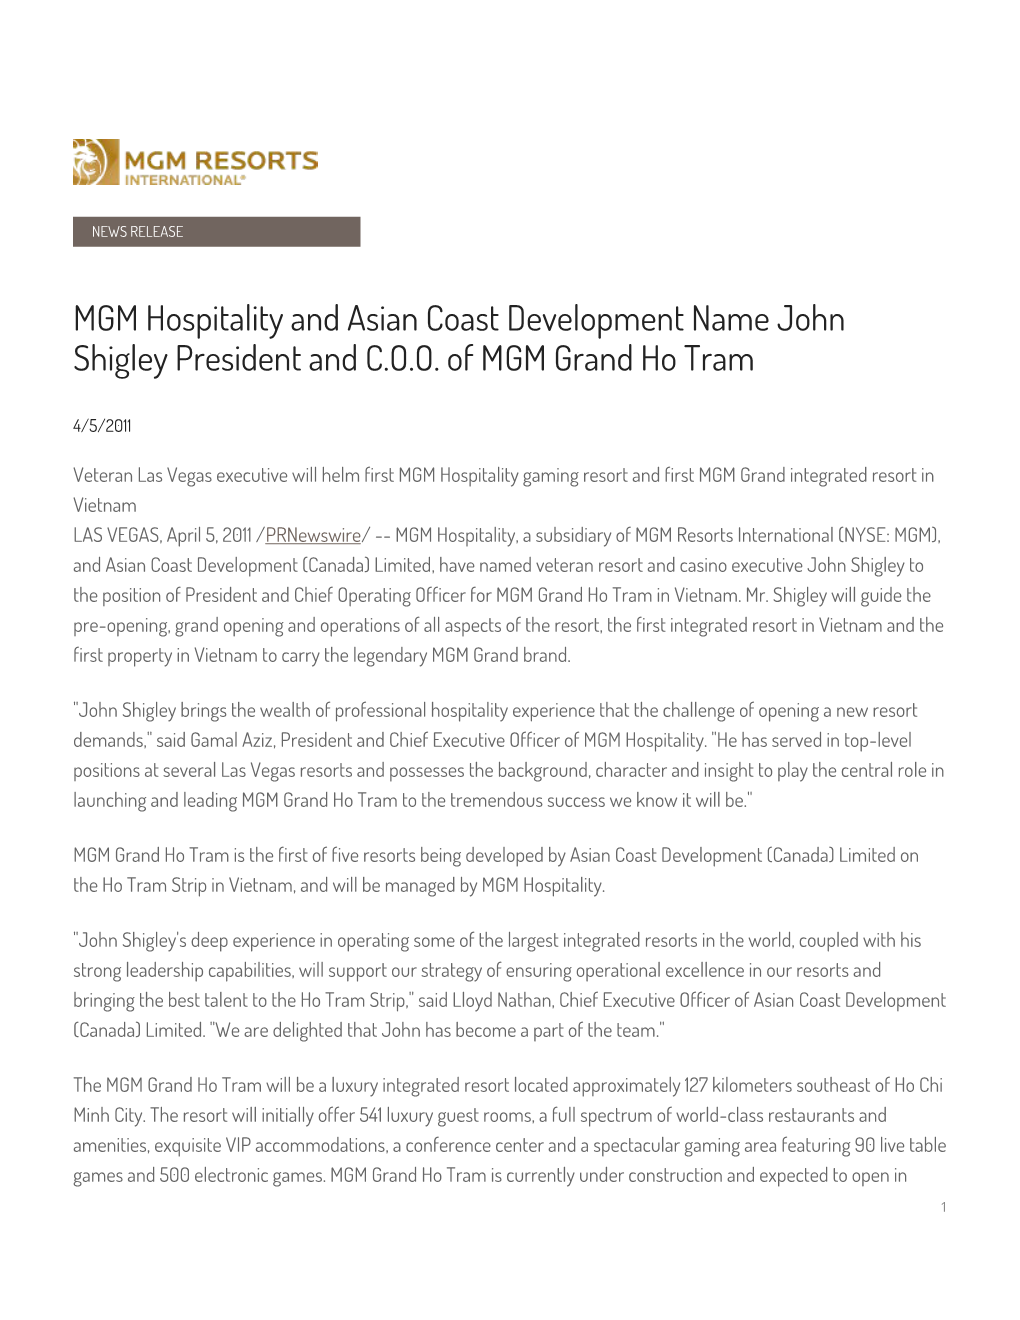 MGM Hospitality and Asian Coast Development Name John Shigley President and C.O.O